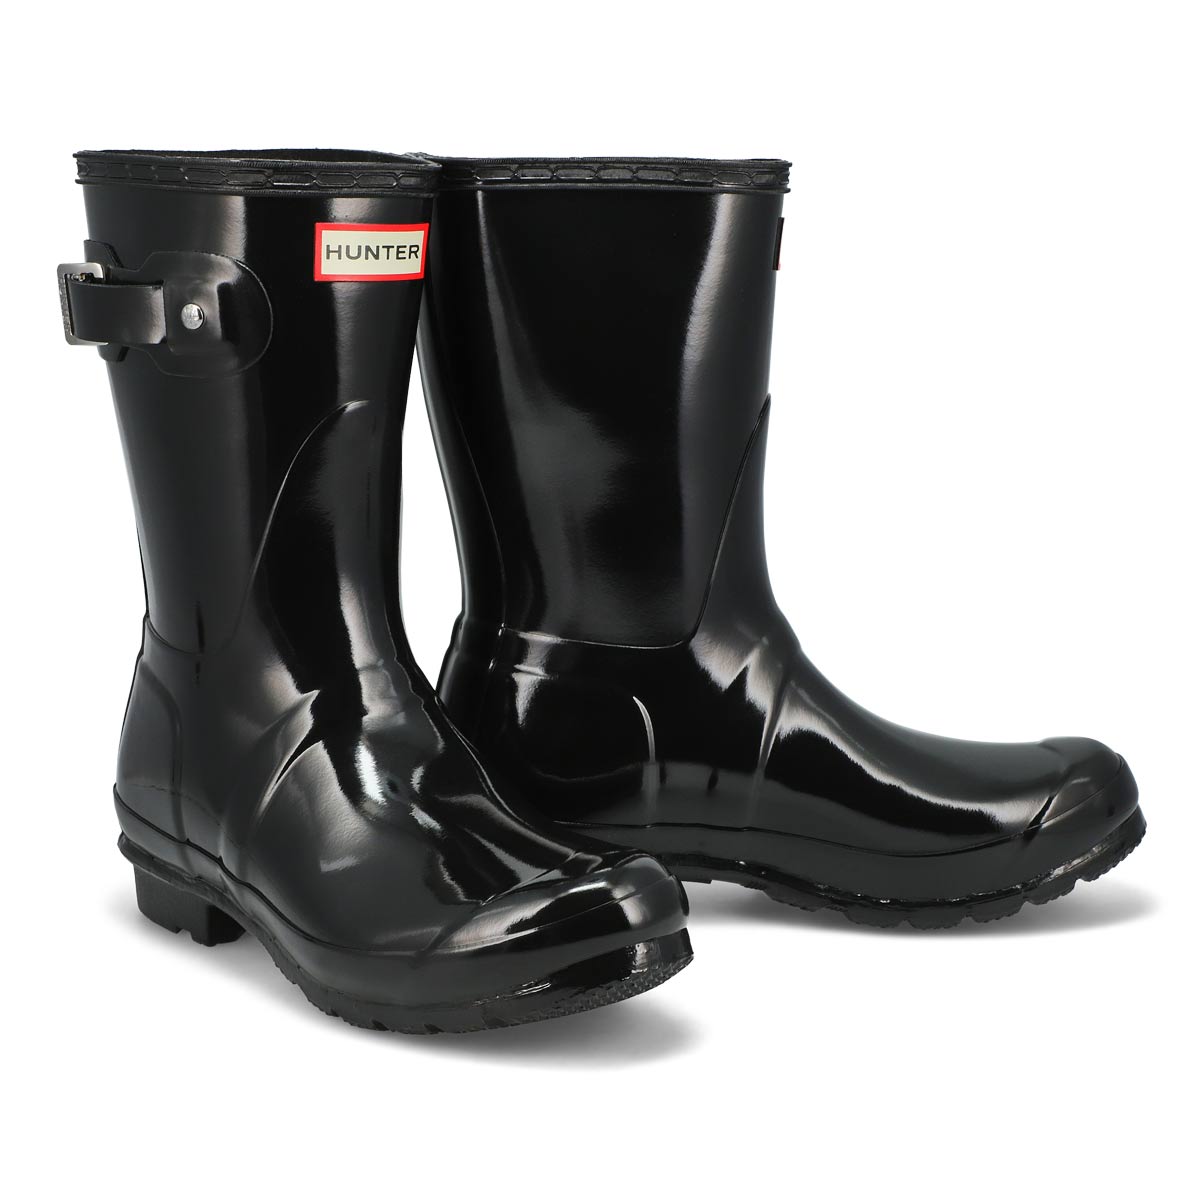 Women's Original Short Gloss Rain Boot - Black